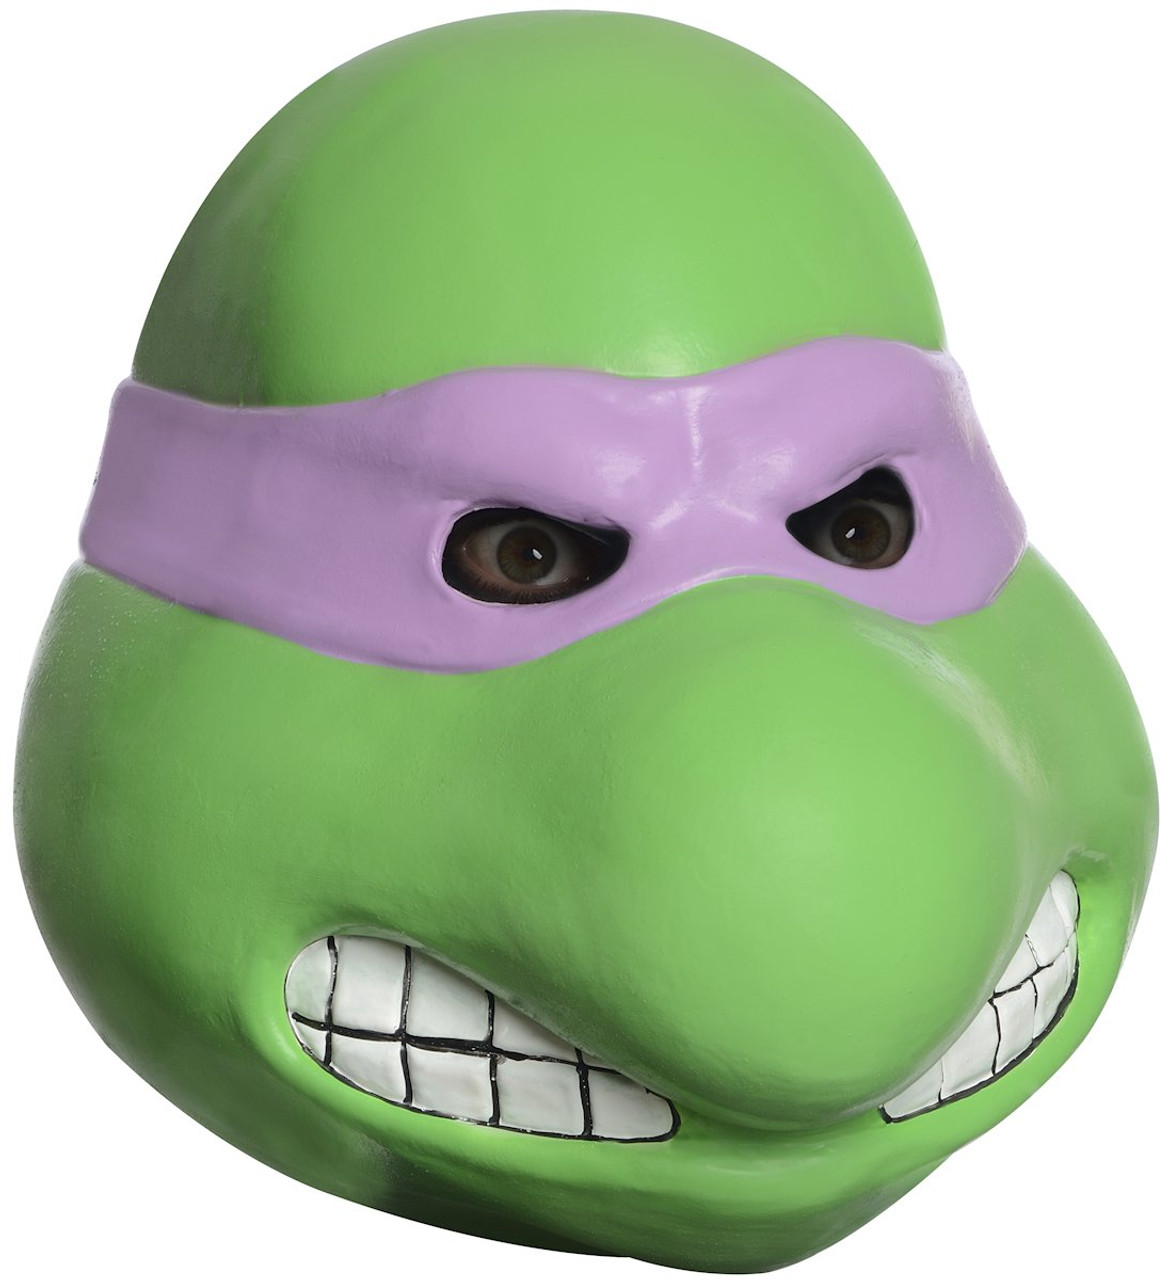 Donatello Toddler Costume